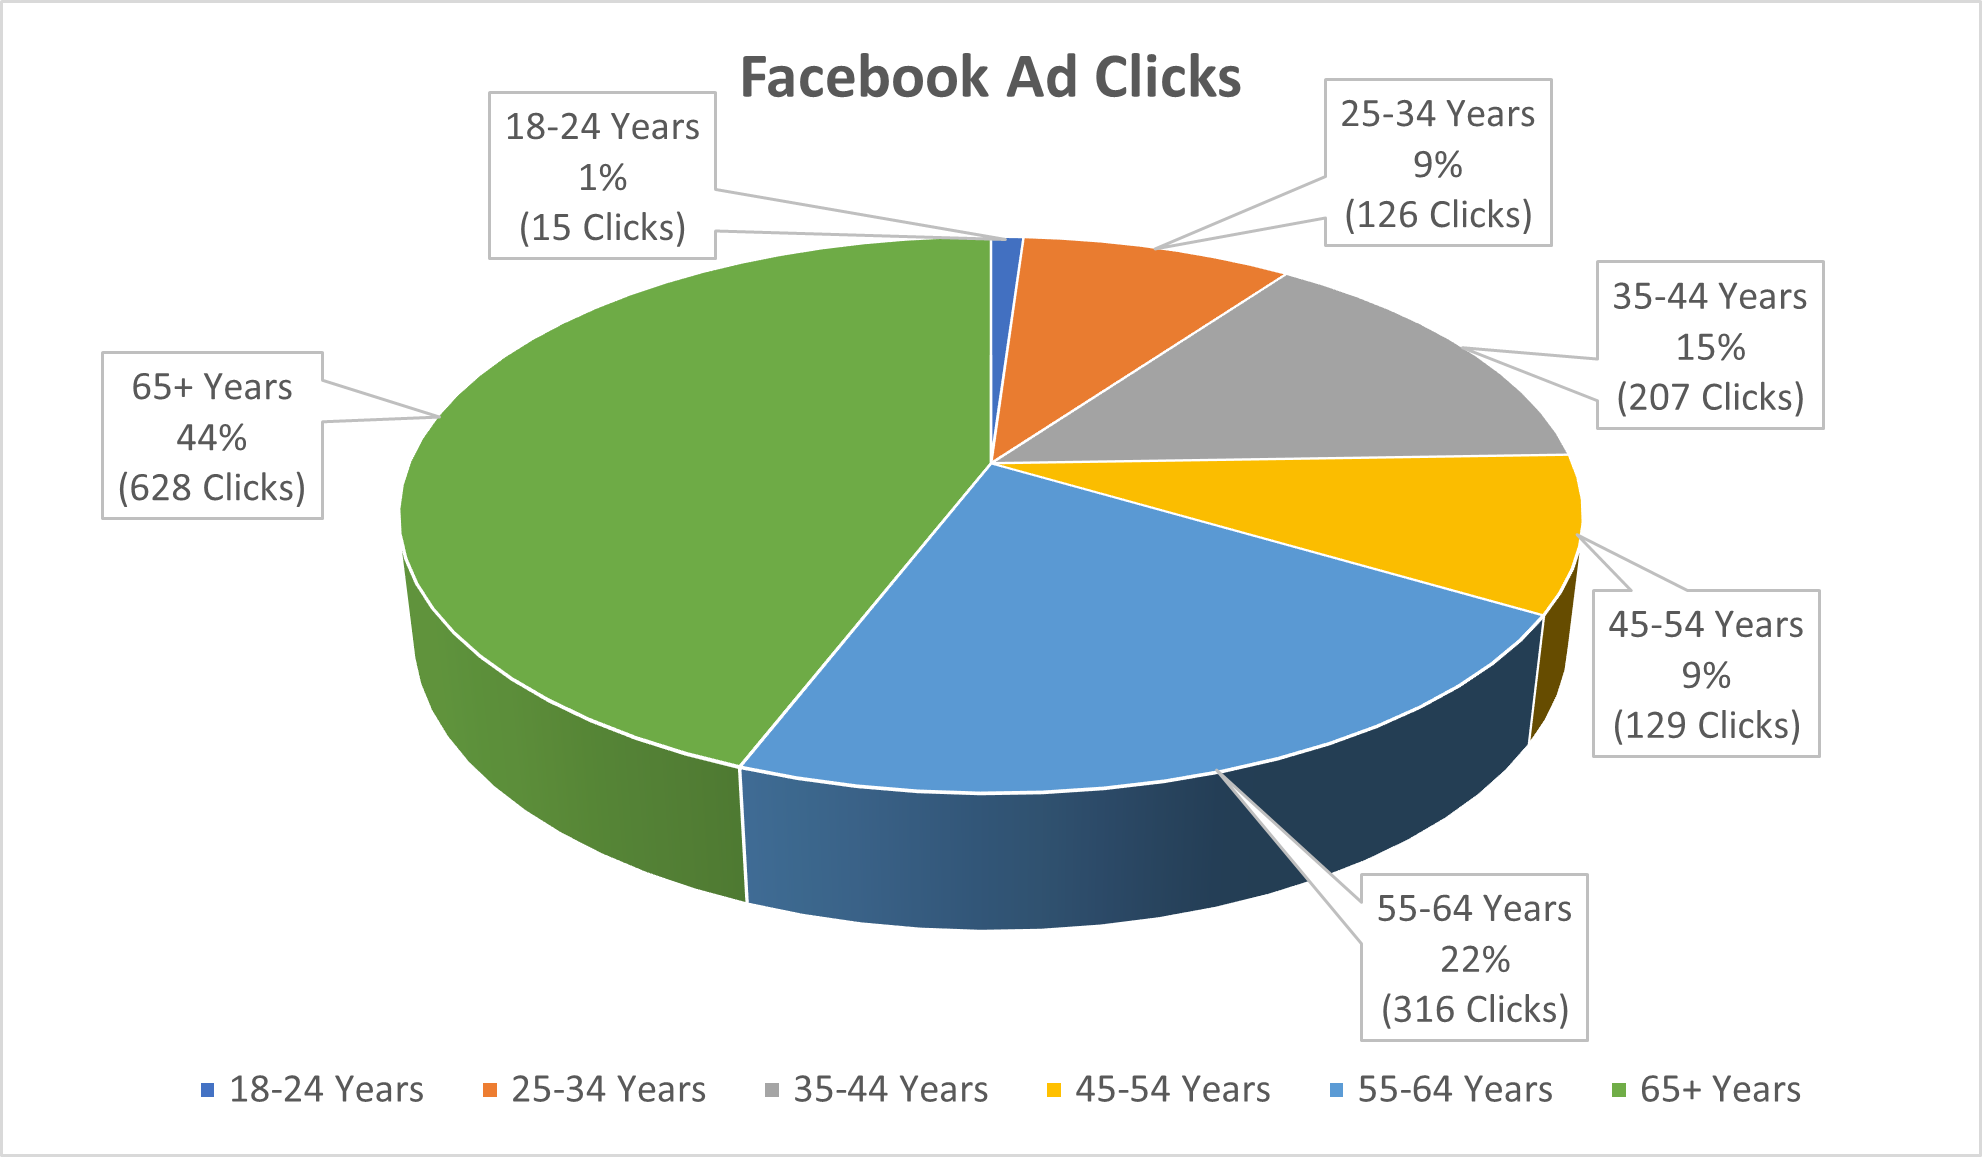 Facebook Ad Clicks pie chart